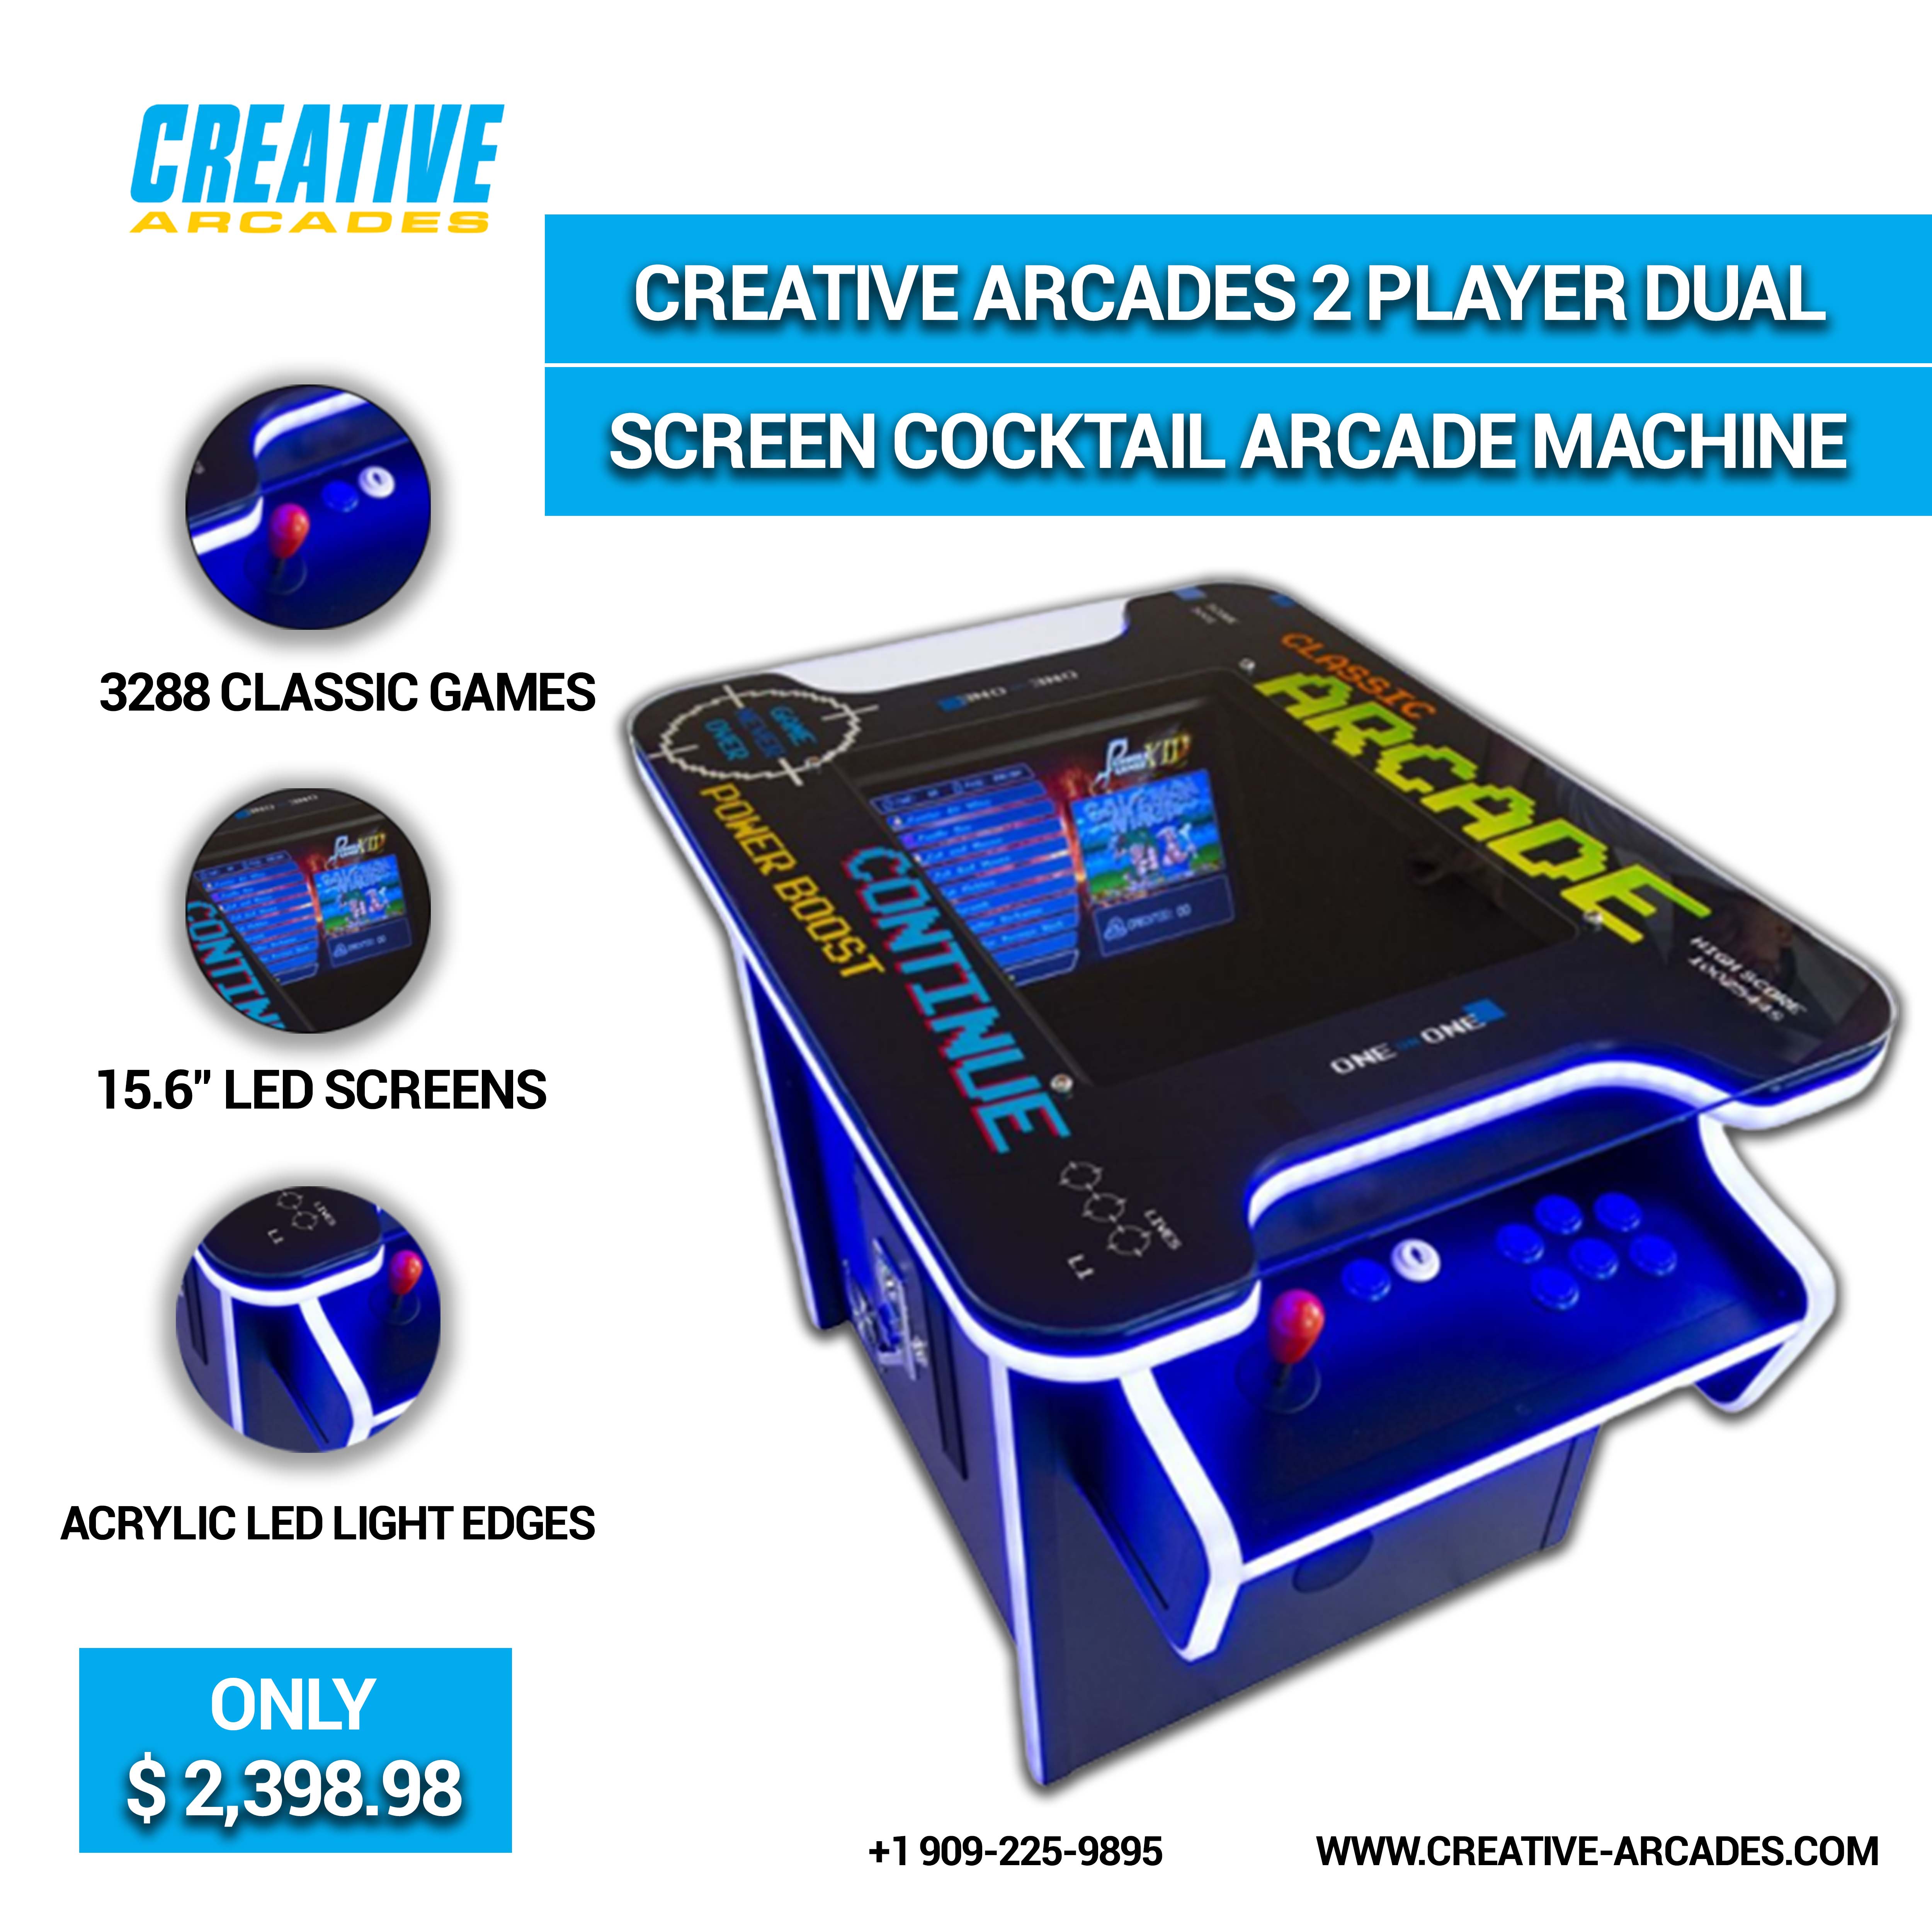 Creative Arcades: A new way to create and inspire - Nabil | Tealfeed